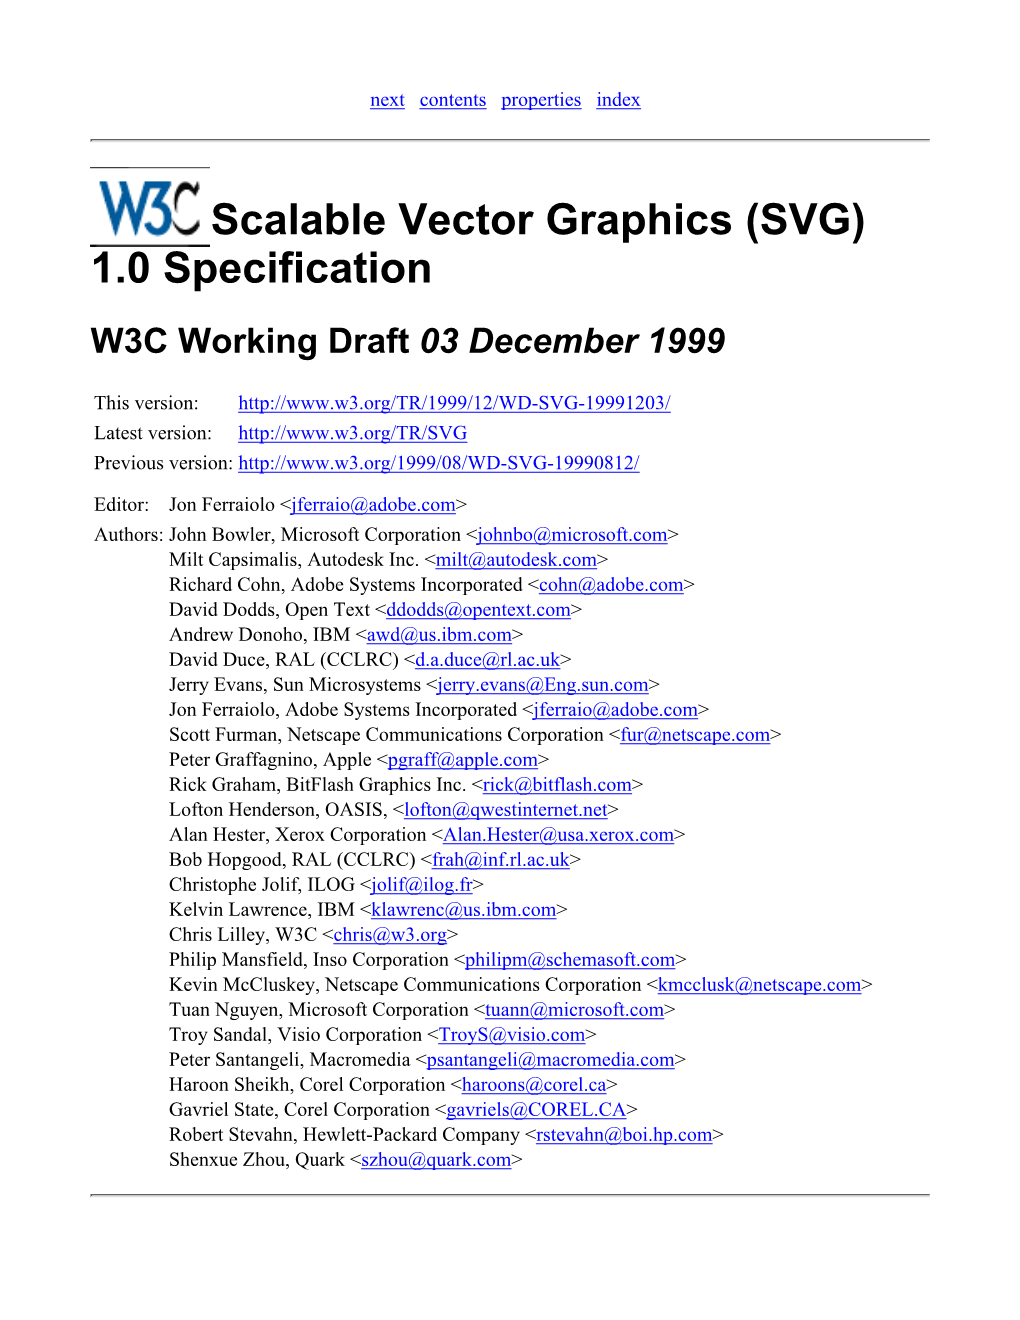 SVG) 1.0 Specification W3C Working Draft 03 December 1999